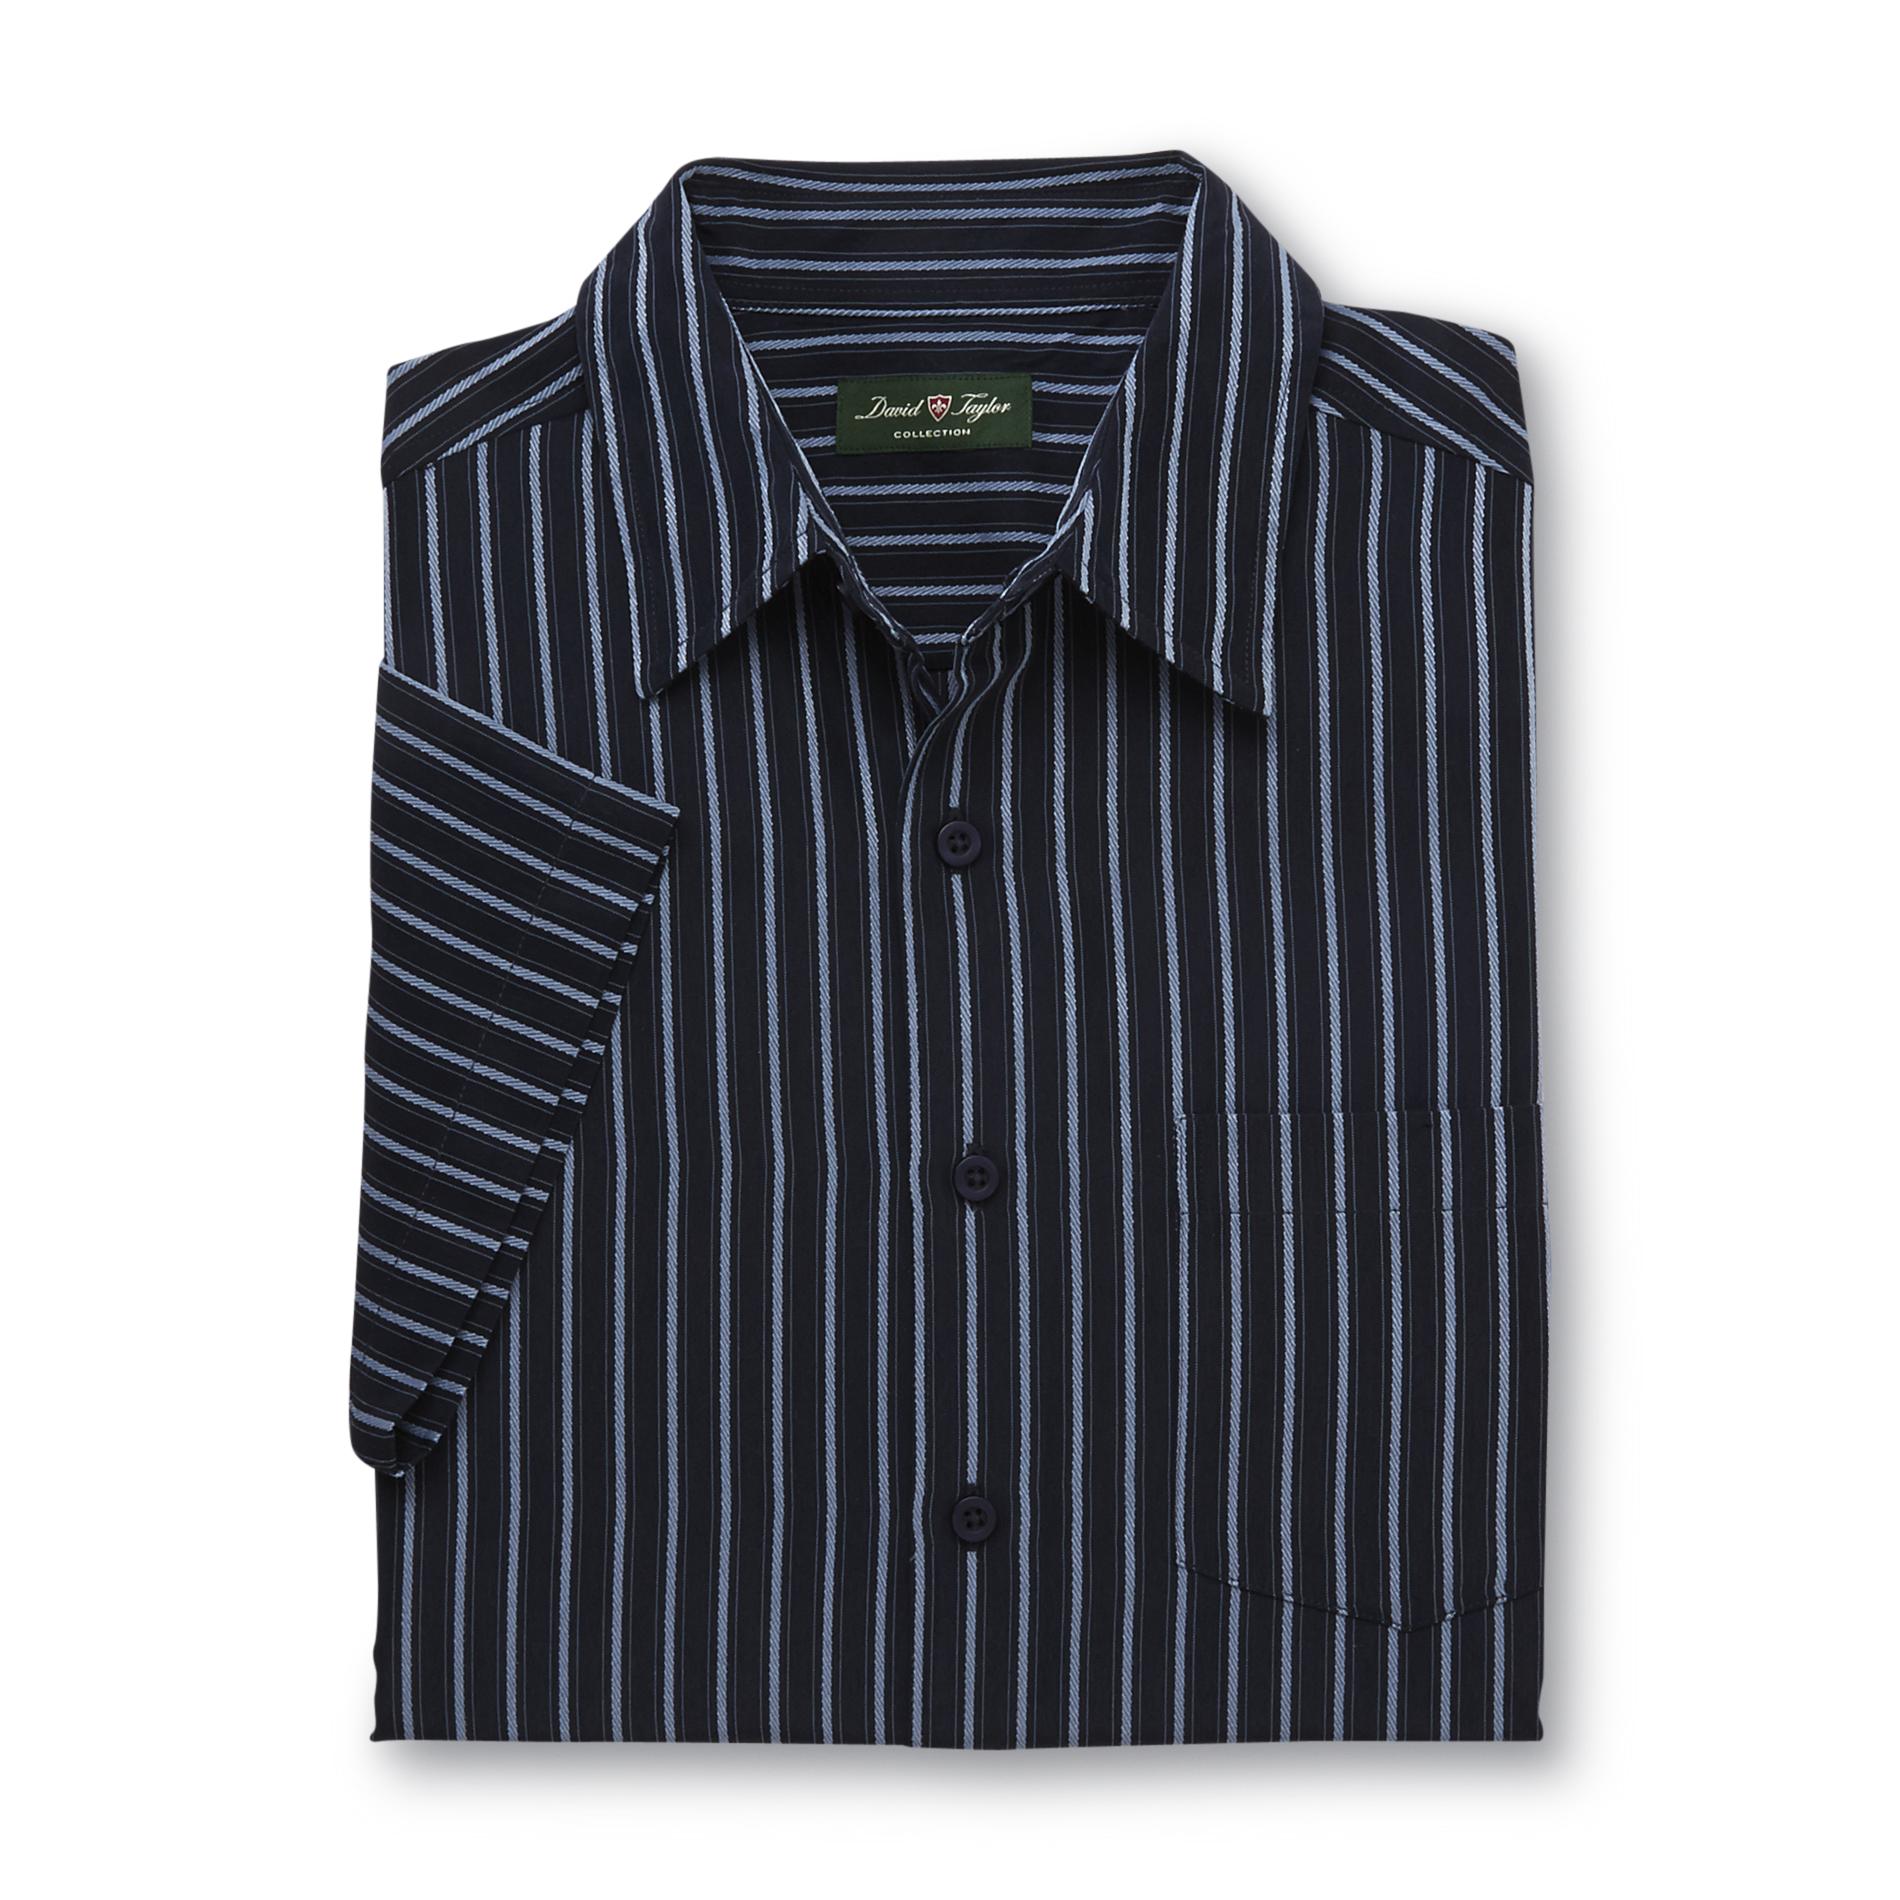 David Taylor Collection Men's Short-Sleeve Shirt - Striped